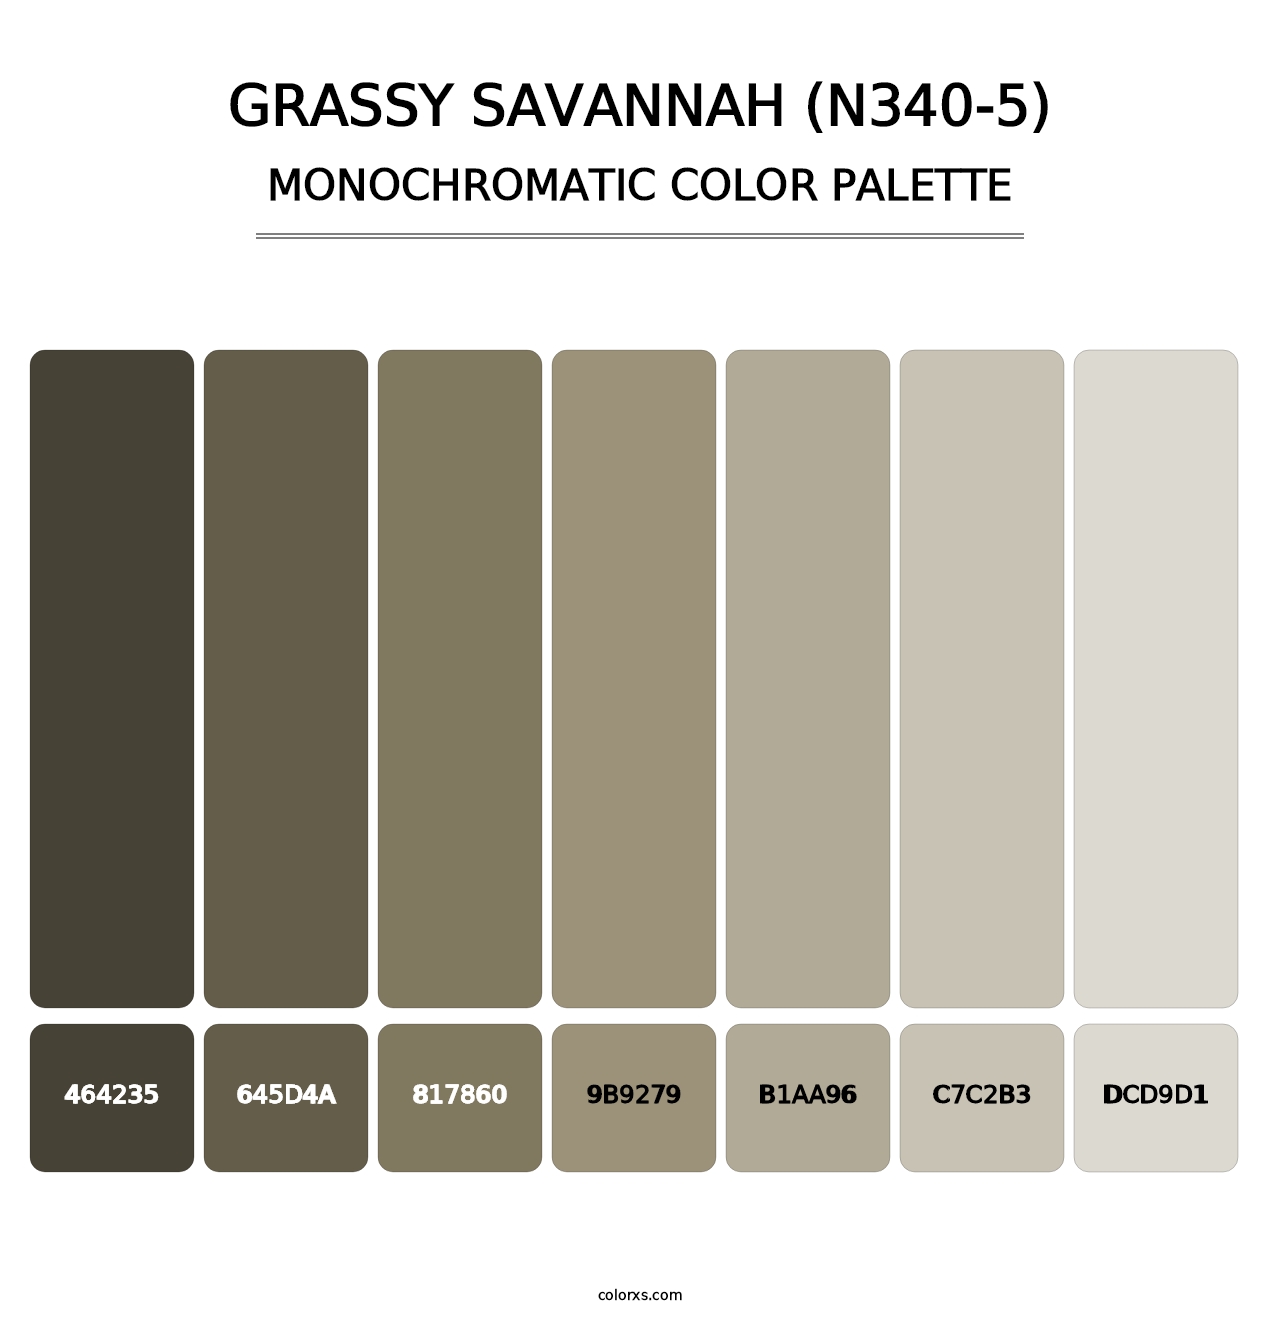 Grassy Savannah (N340-5) - Monochromatic Color Palette